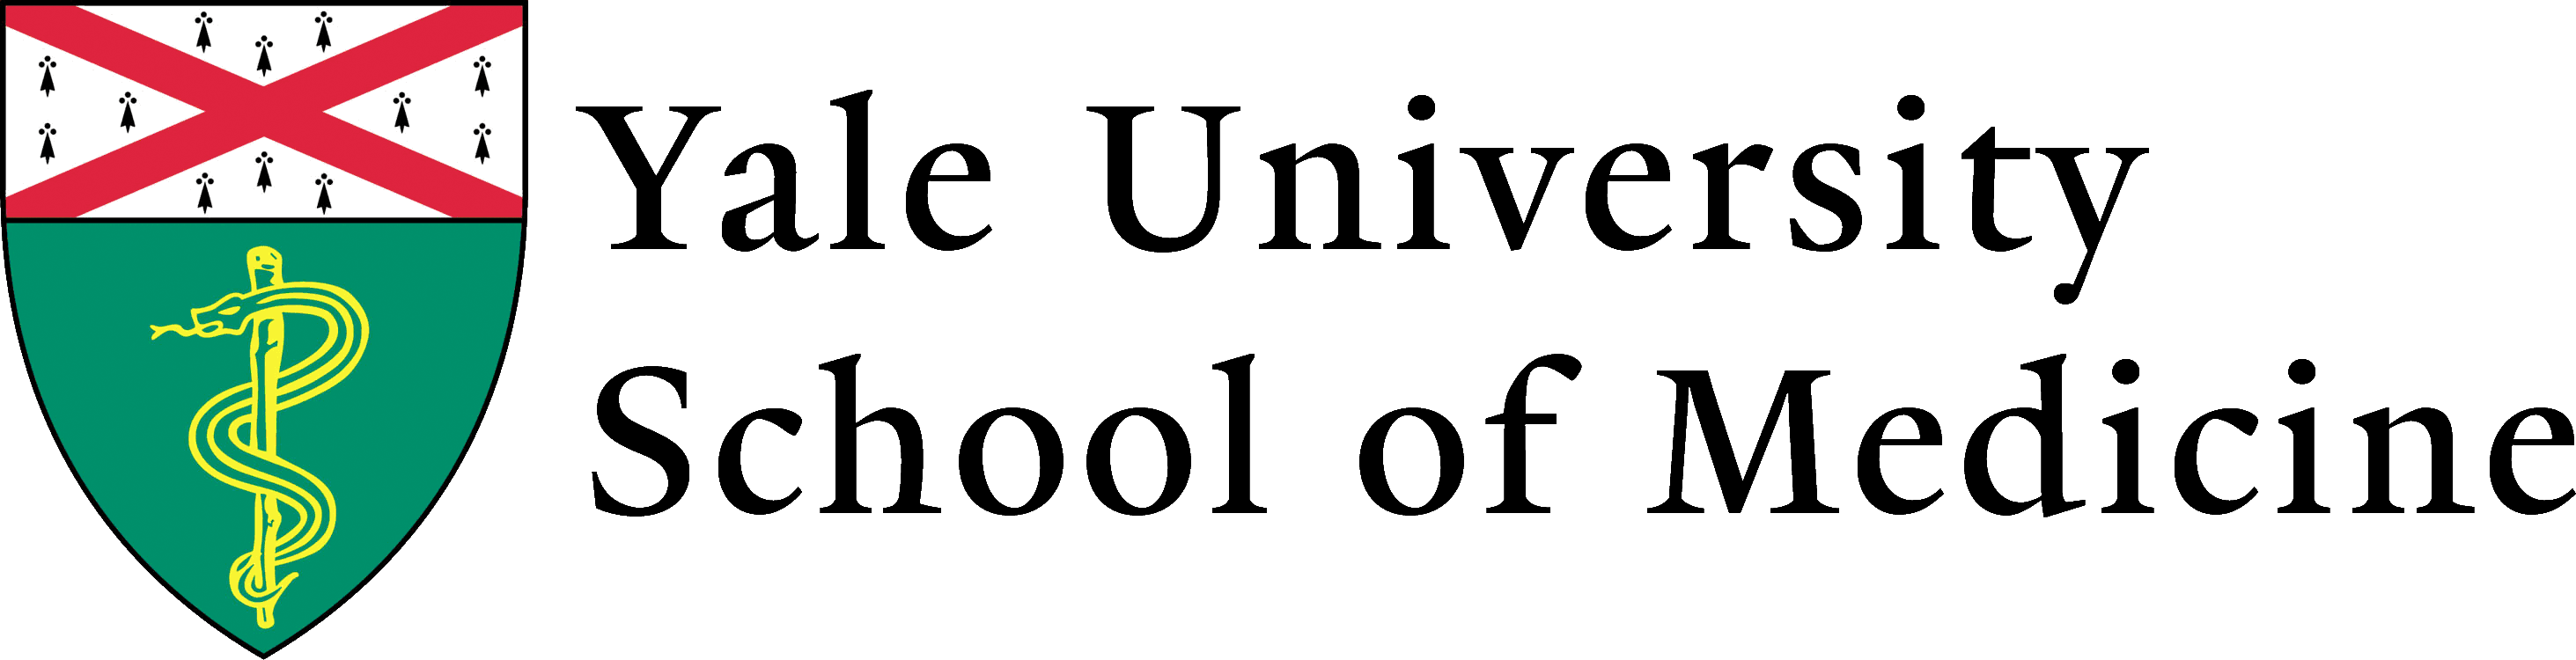 Yale School of Medicine Logo